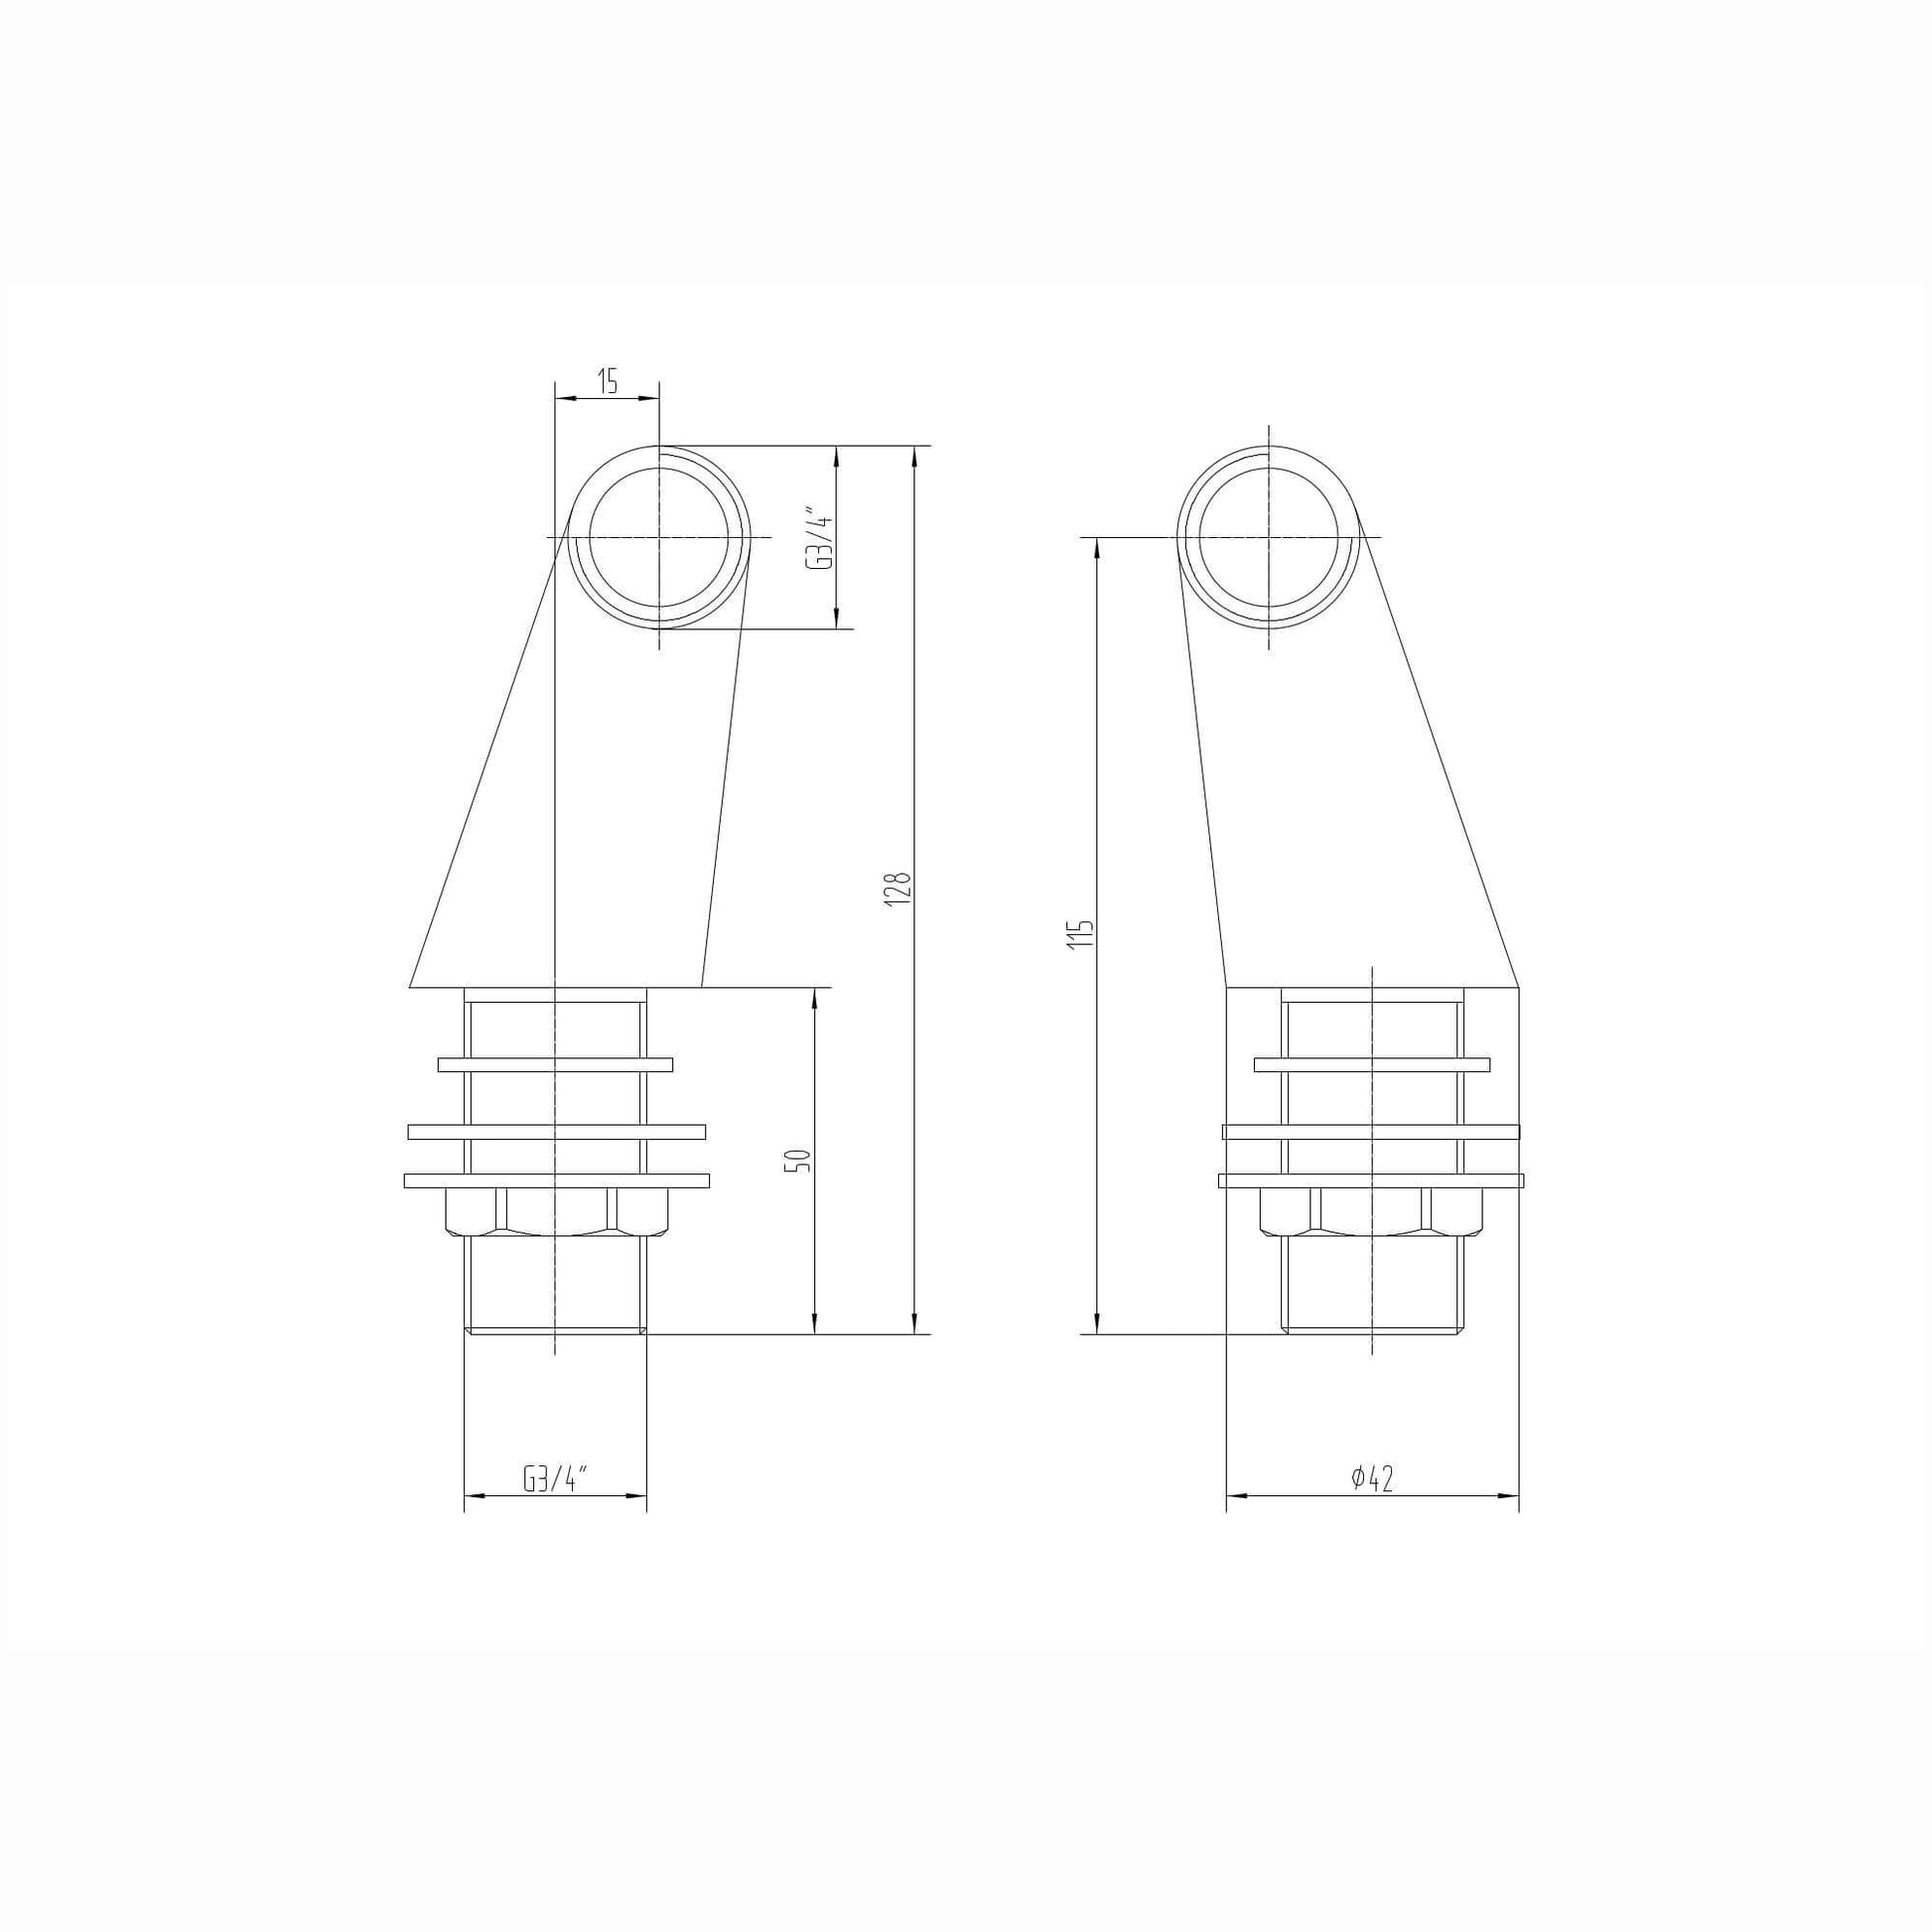 Pair of standard bath tap legs for deck mounting - matte black - Taps